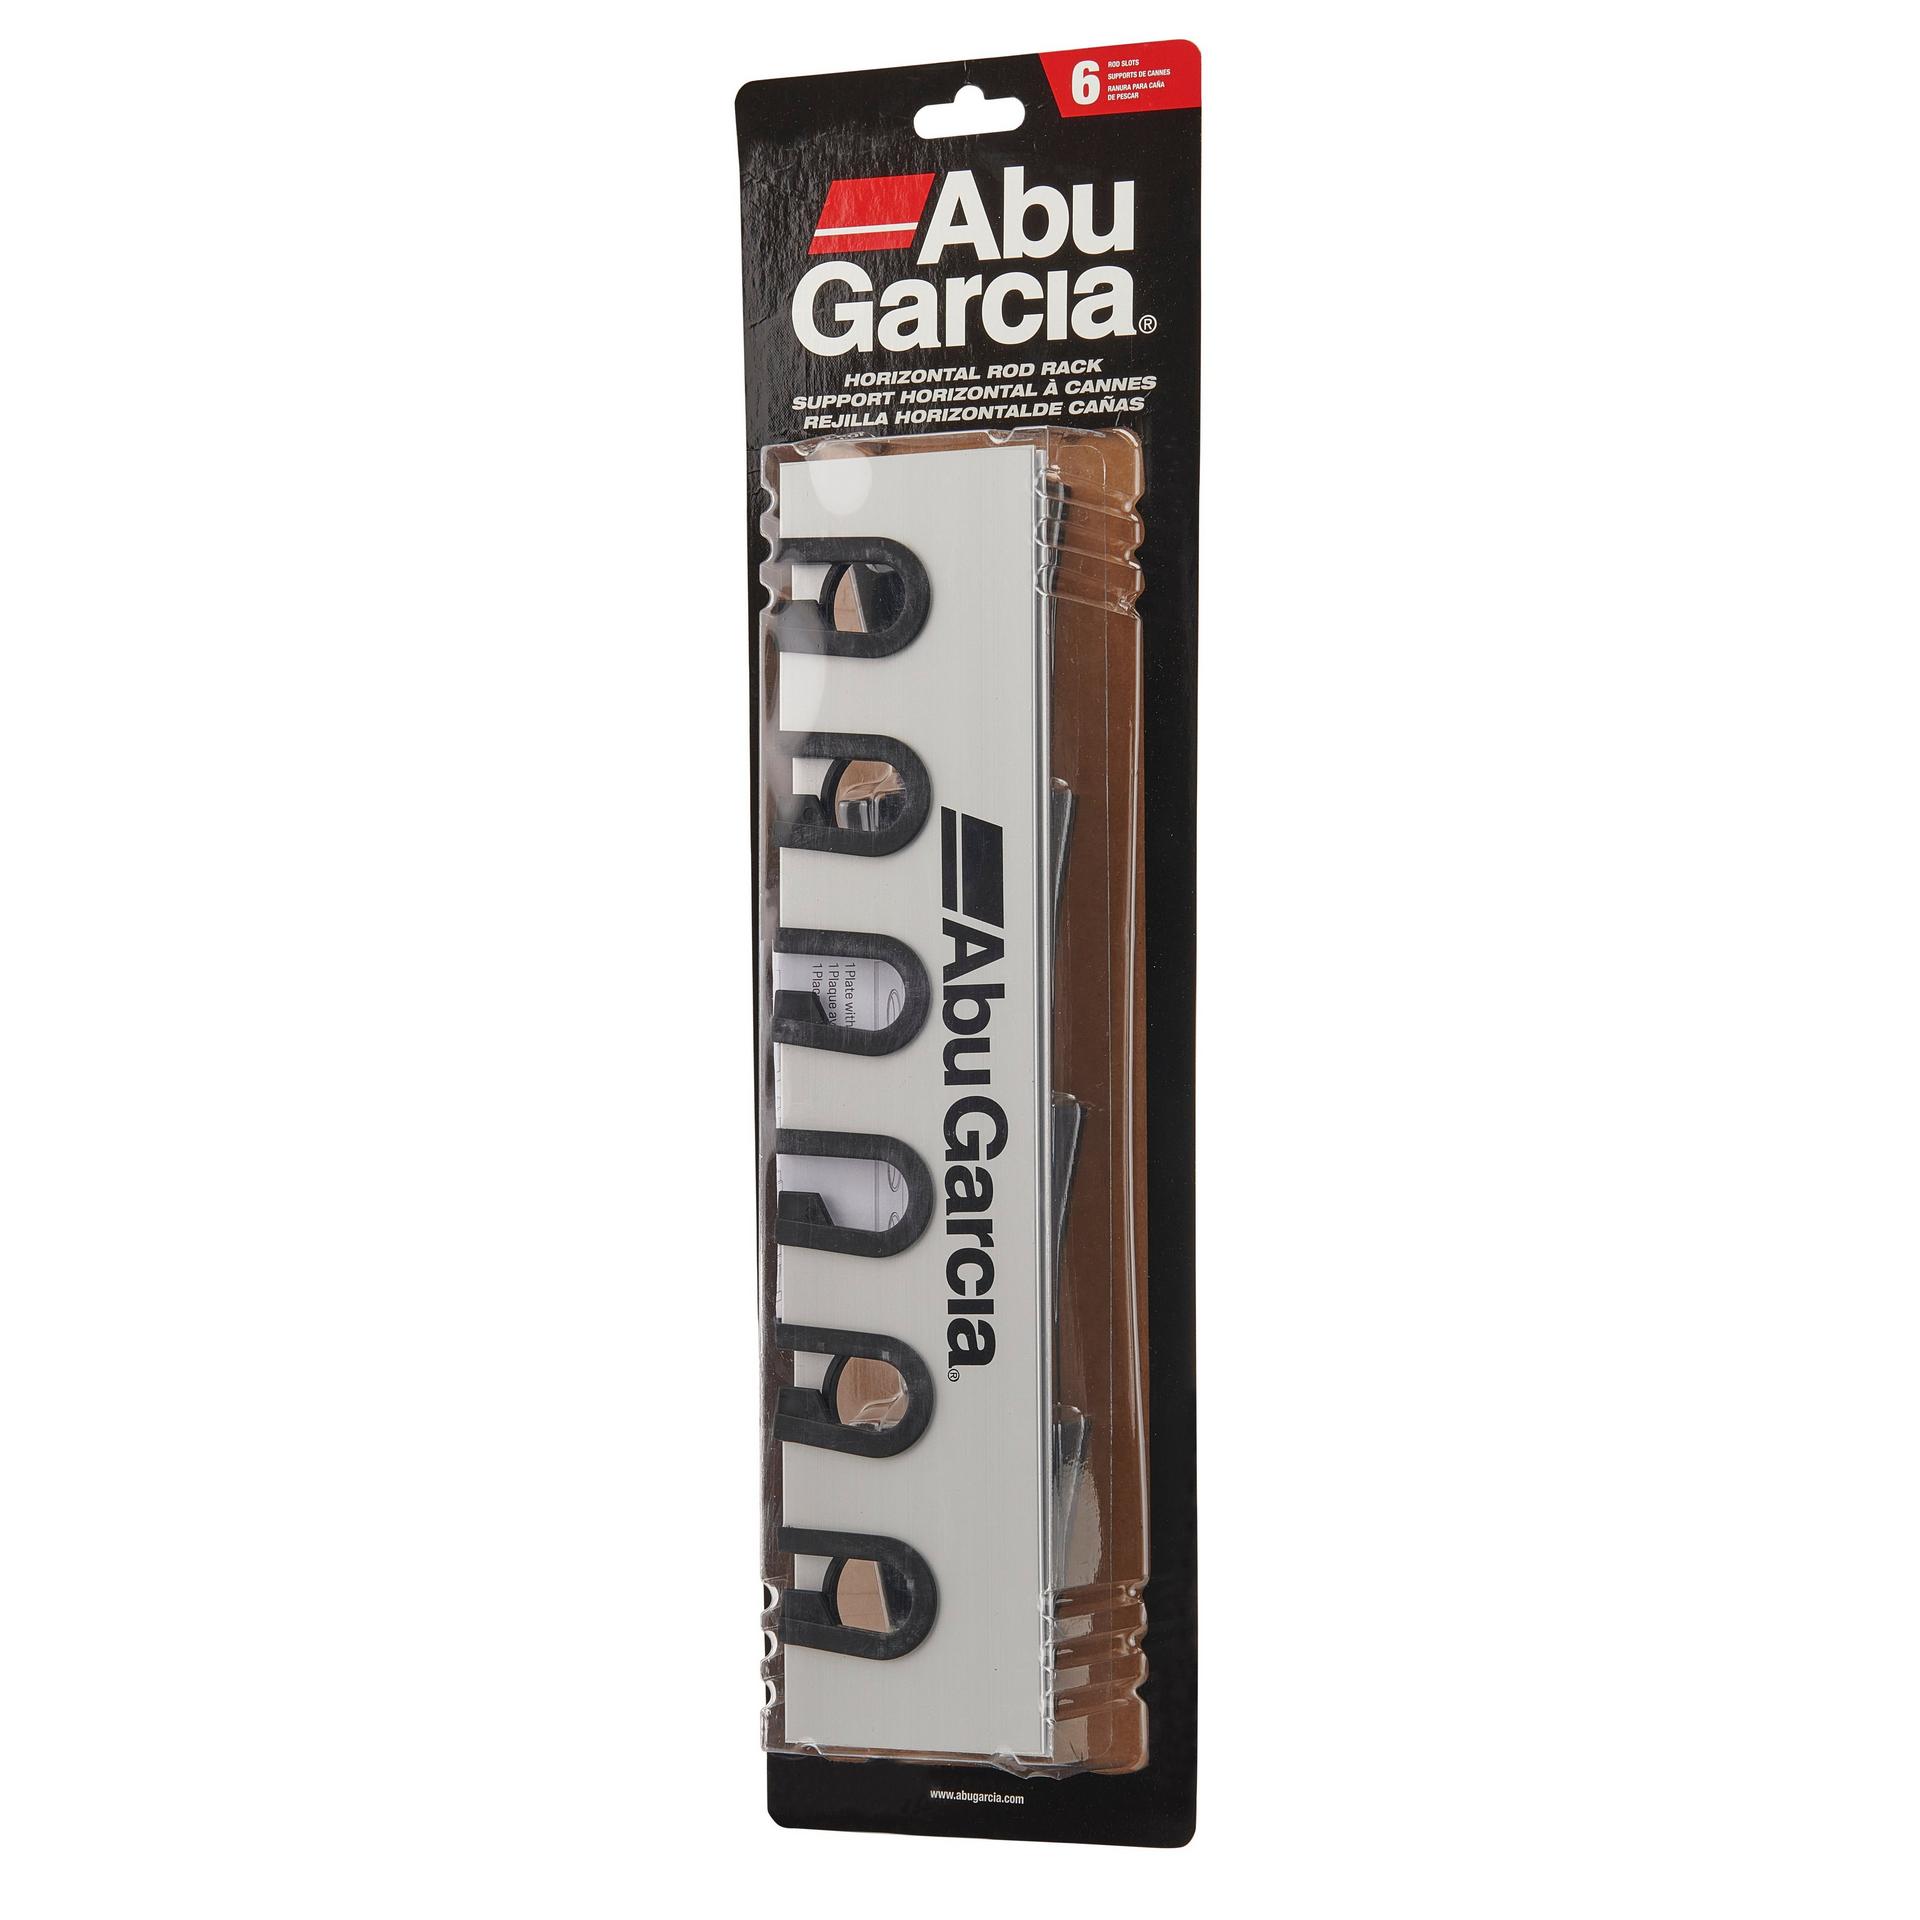 Horizontal 6 Rod Rack | Abu Garcia®